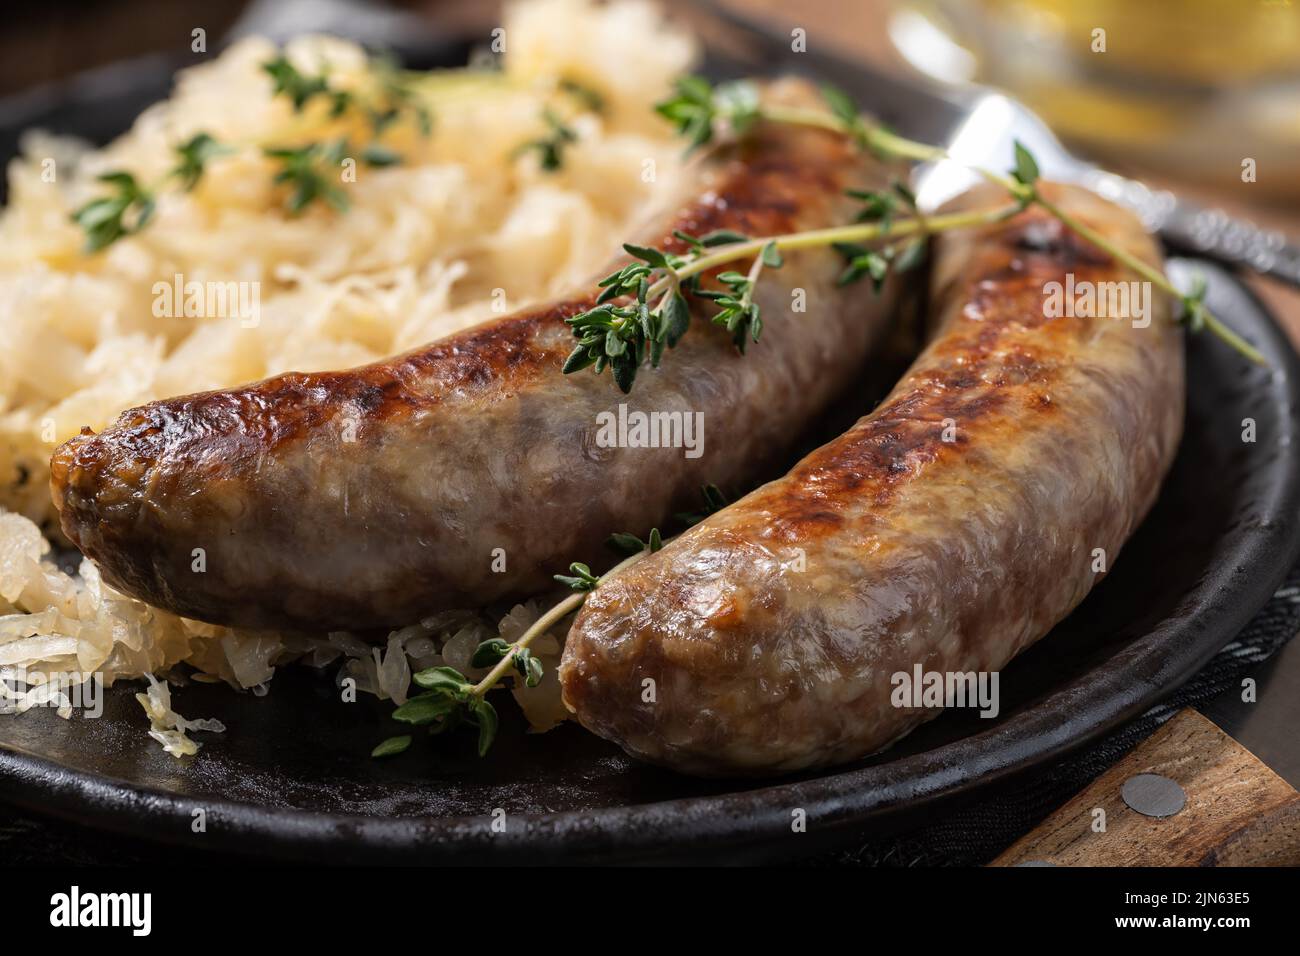 Primer plano de la cena de bratwurst con chucrut adornado con tomillo en un plato negro Foto de stock